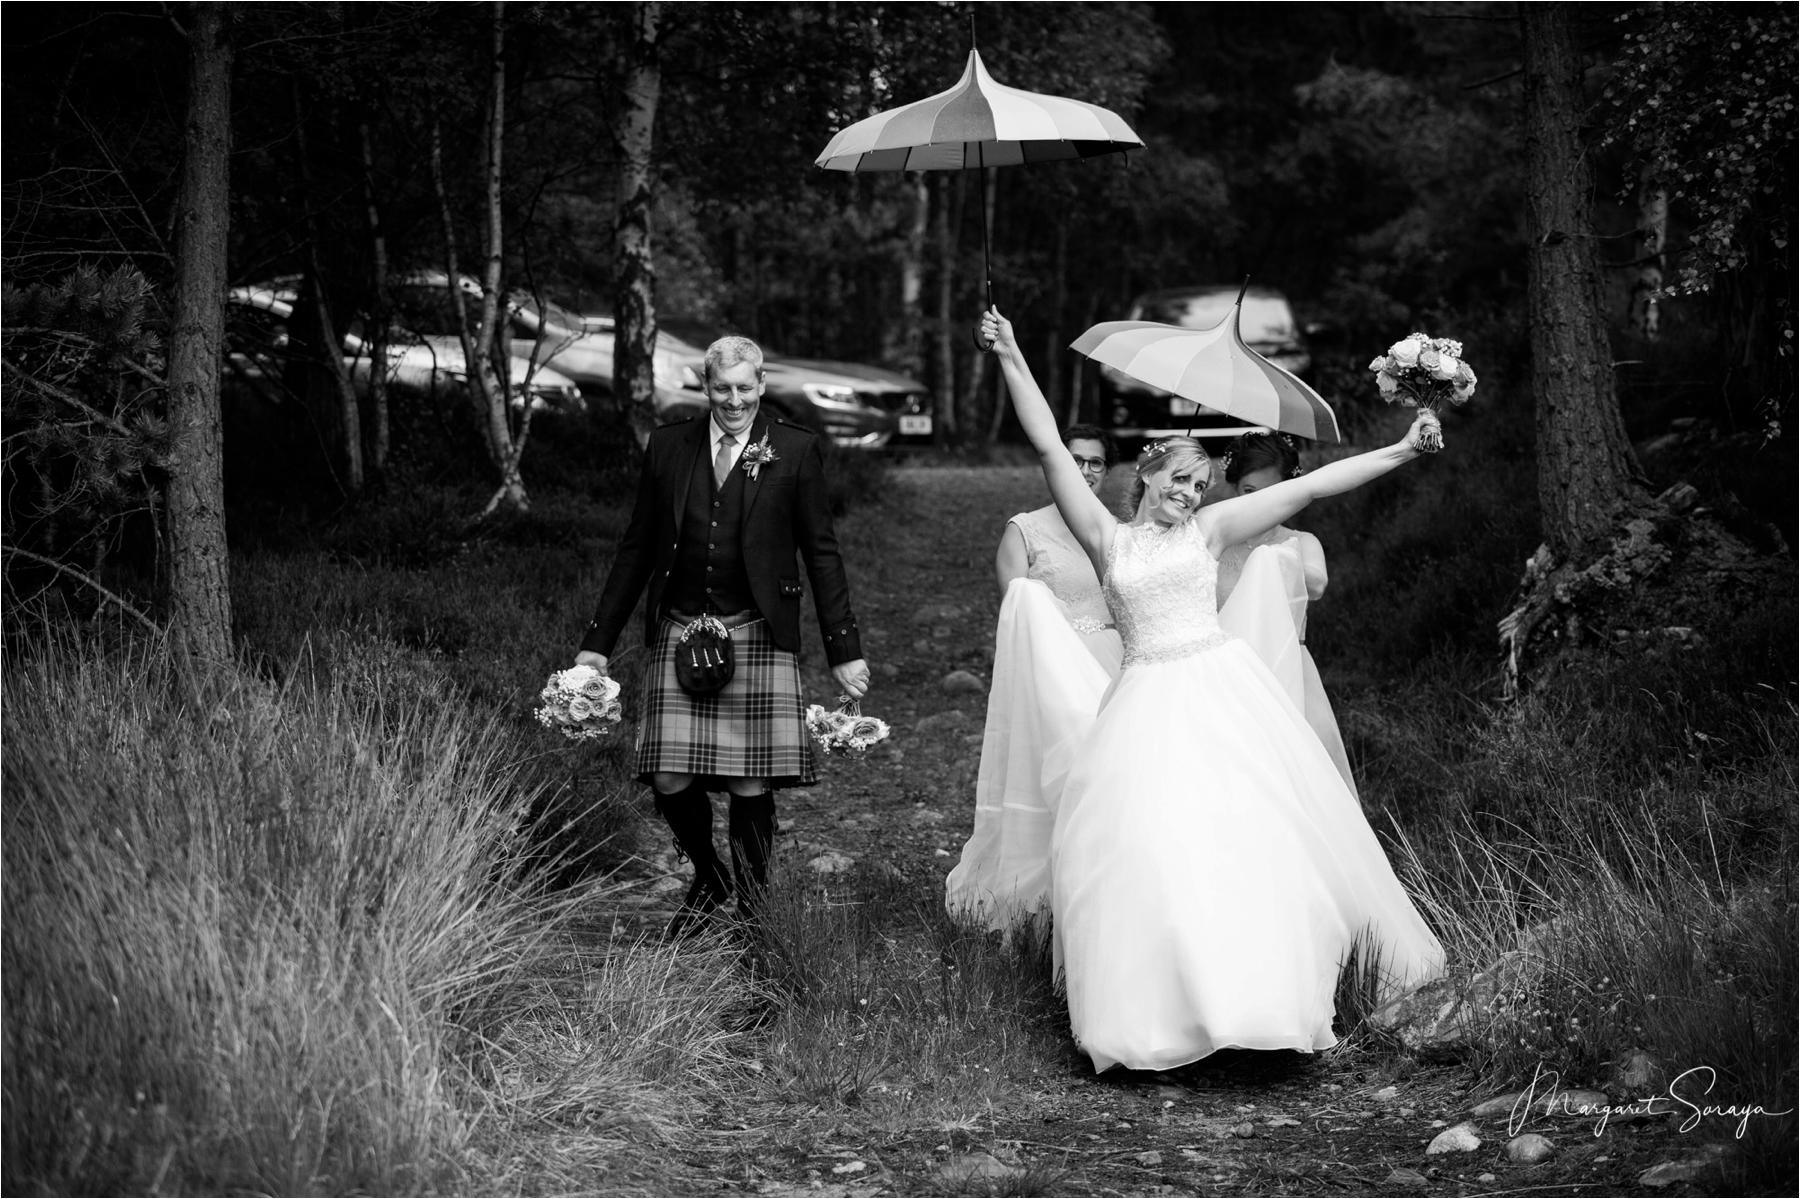 Wedding photographer scotland